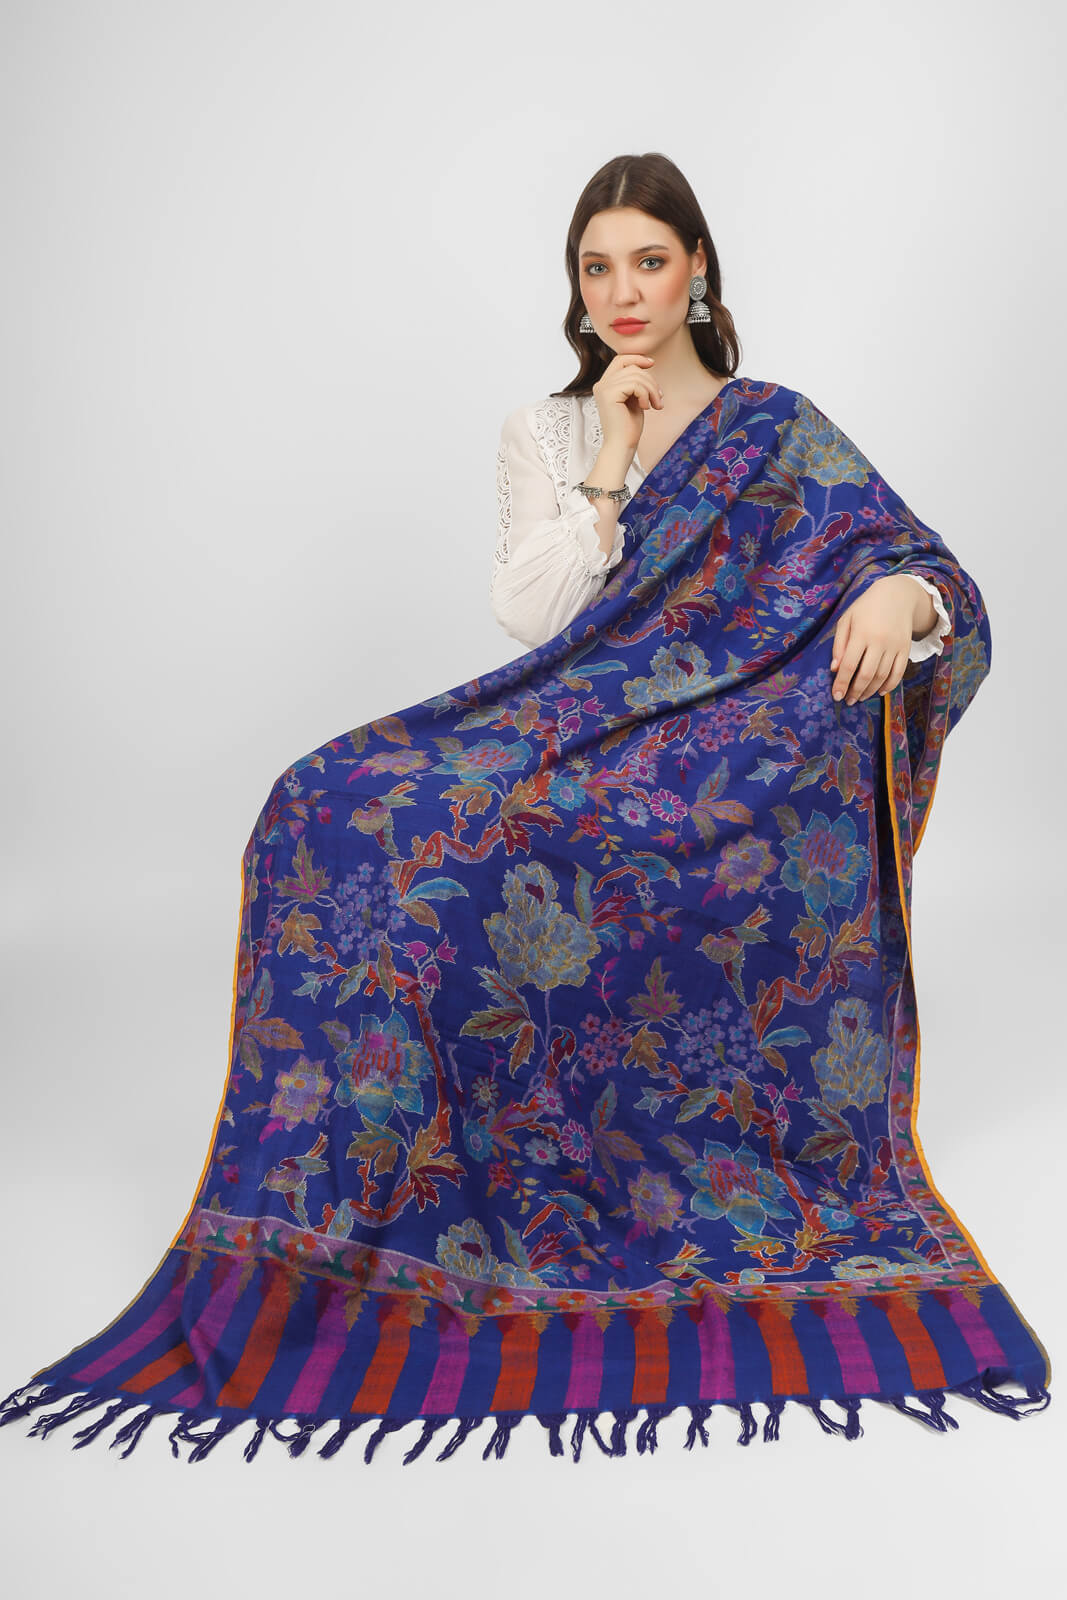 blue kani shawl beautiful and elegant handmade 